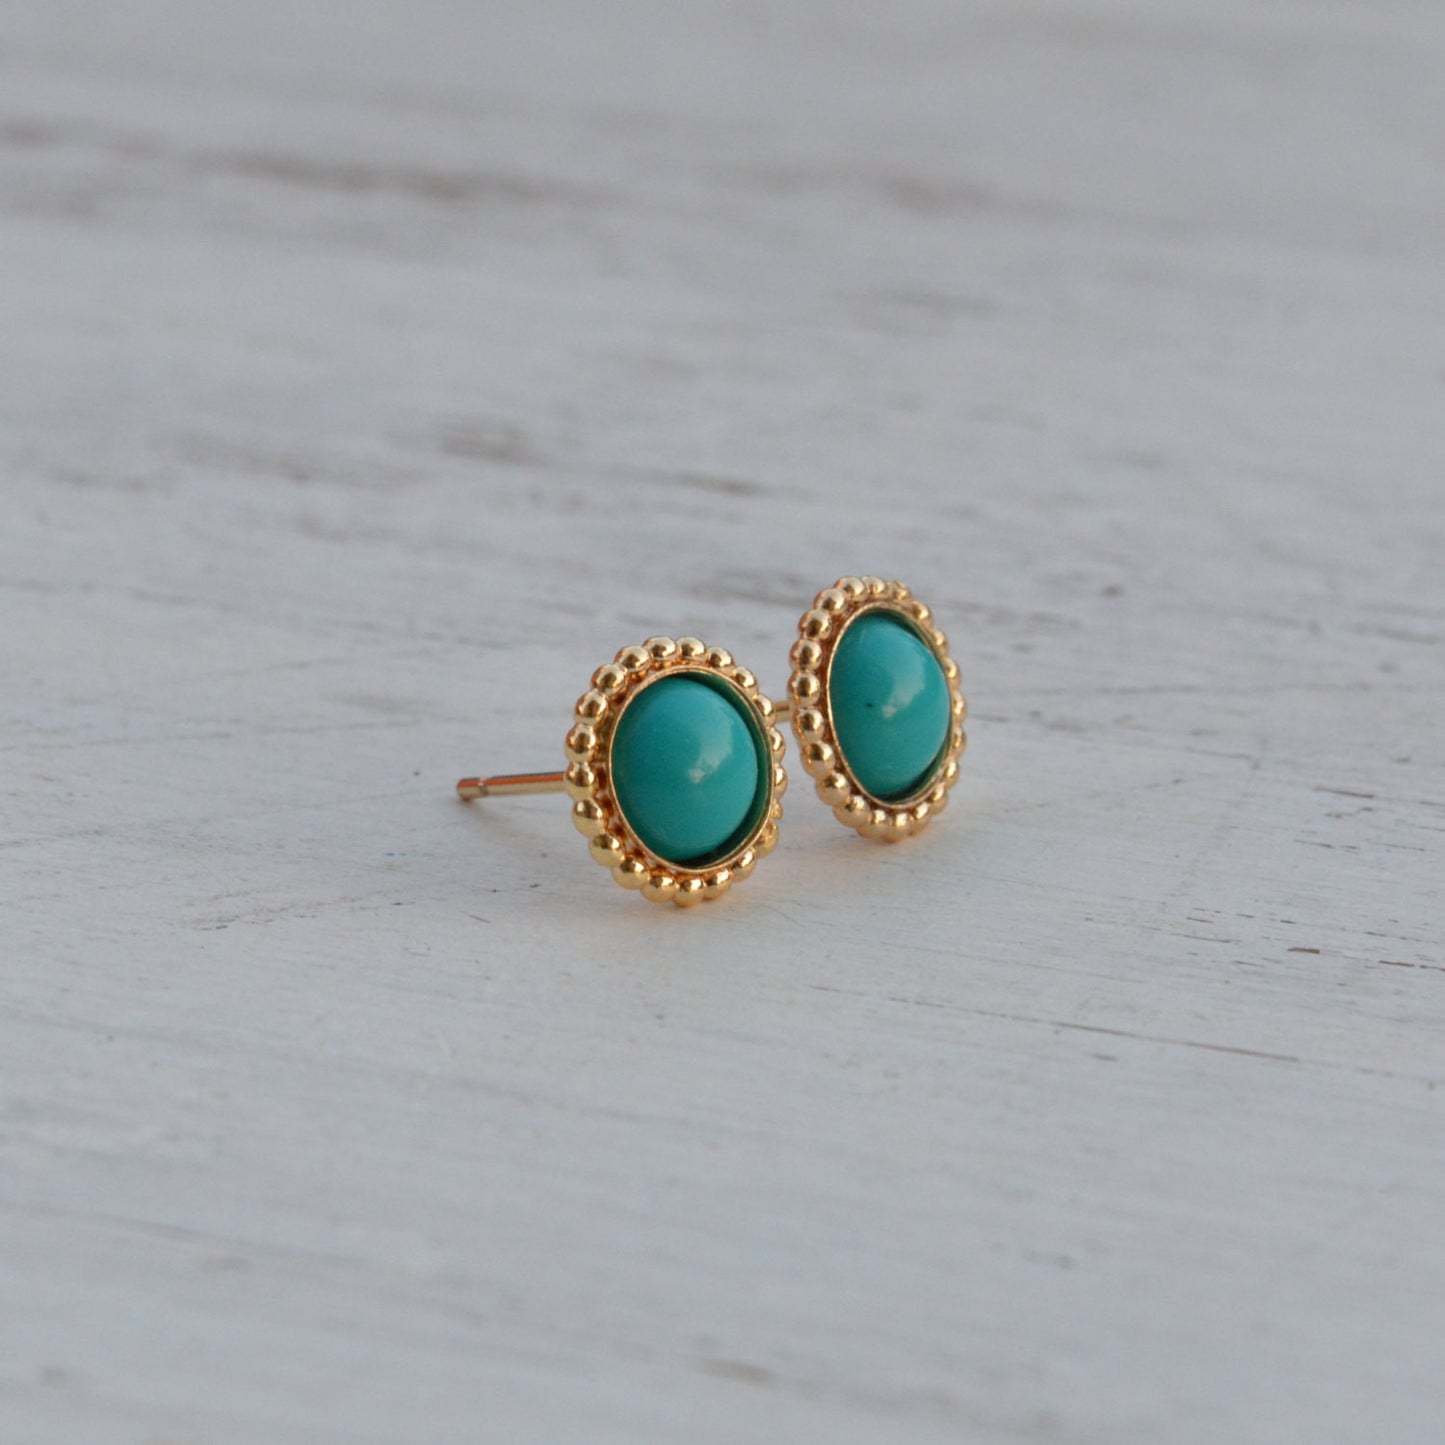 Turquoise earrings stud